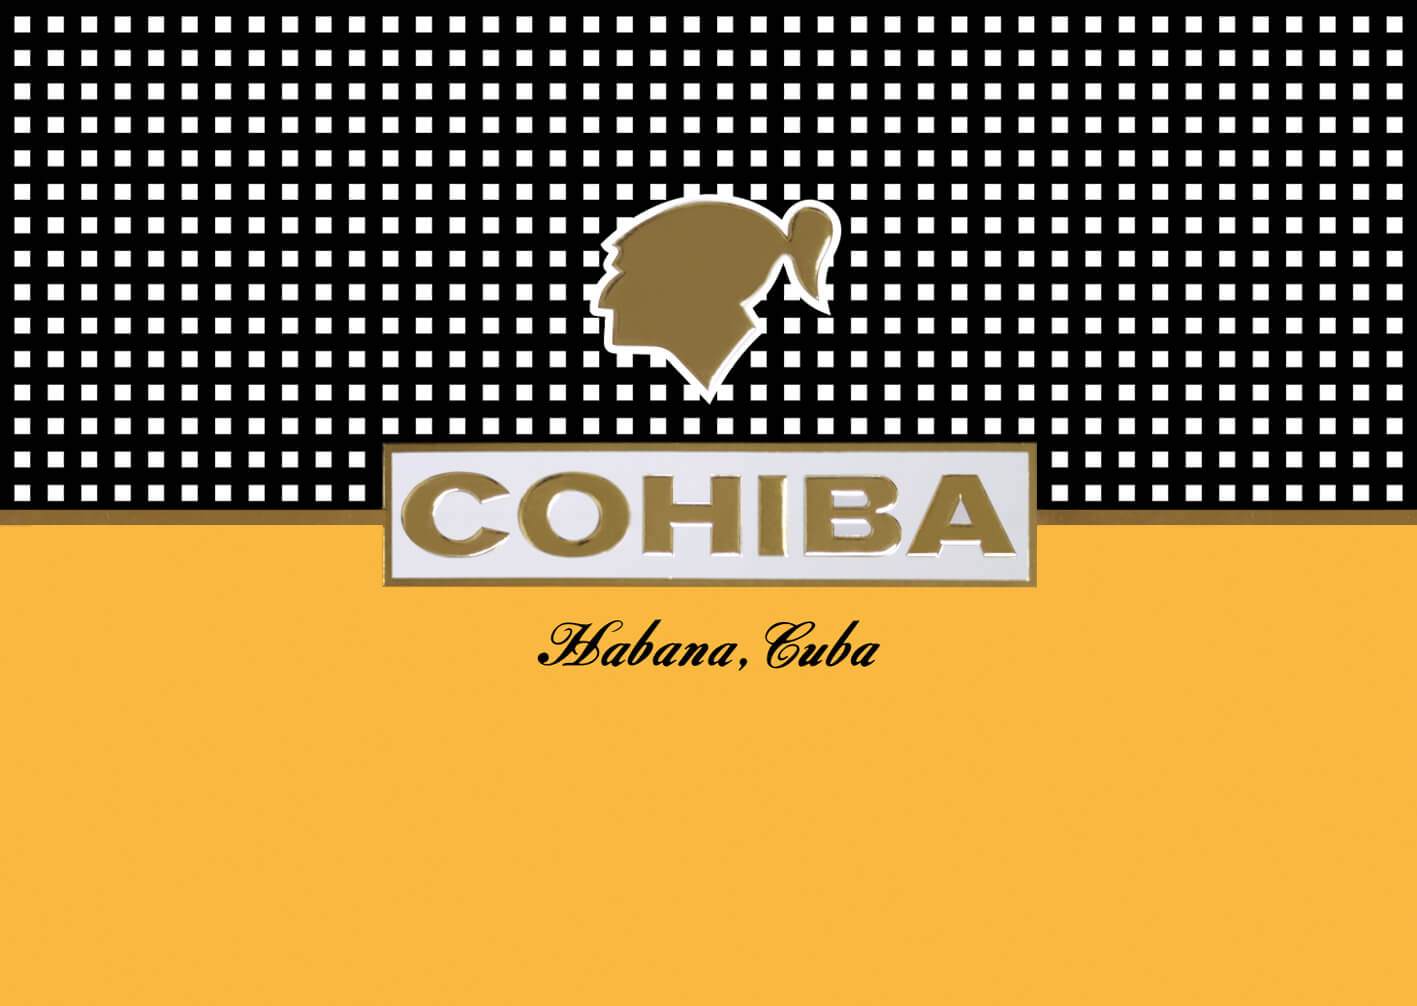 Cohiba cigar brand